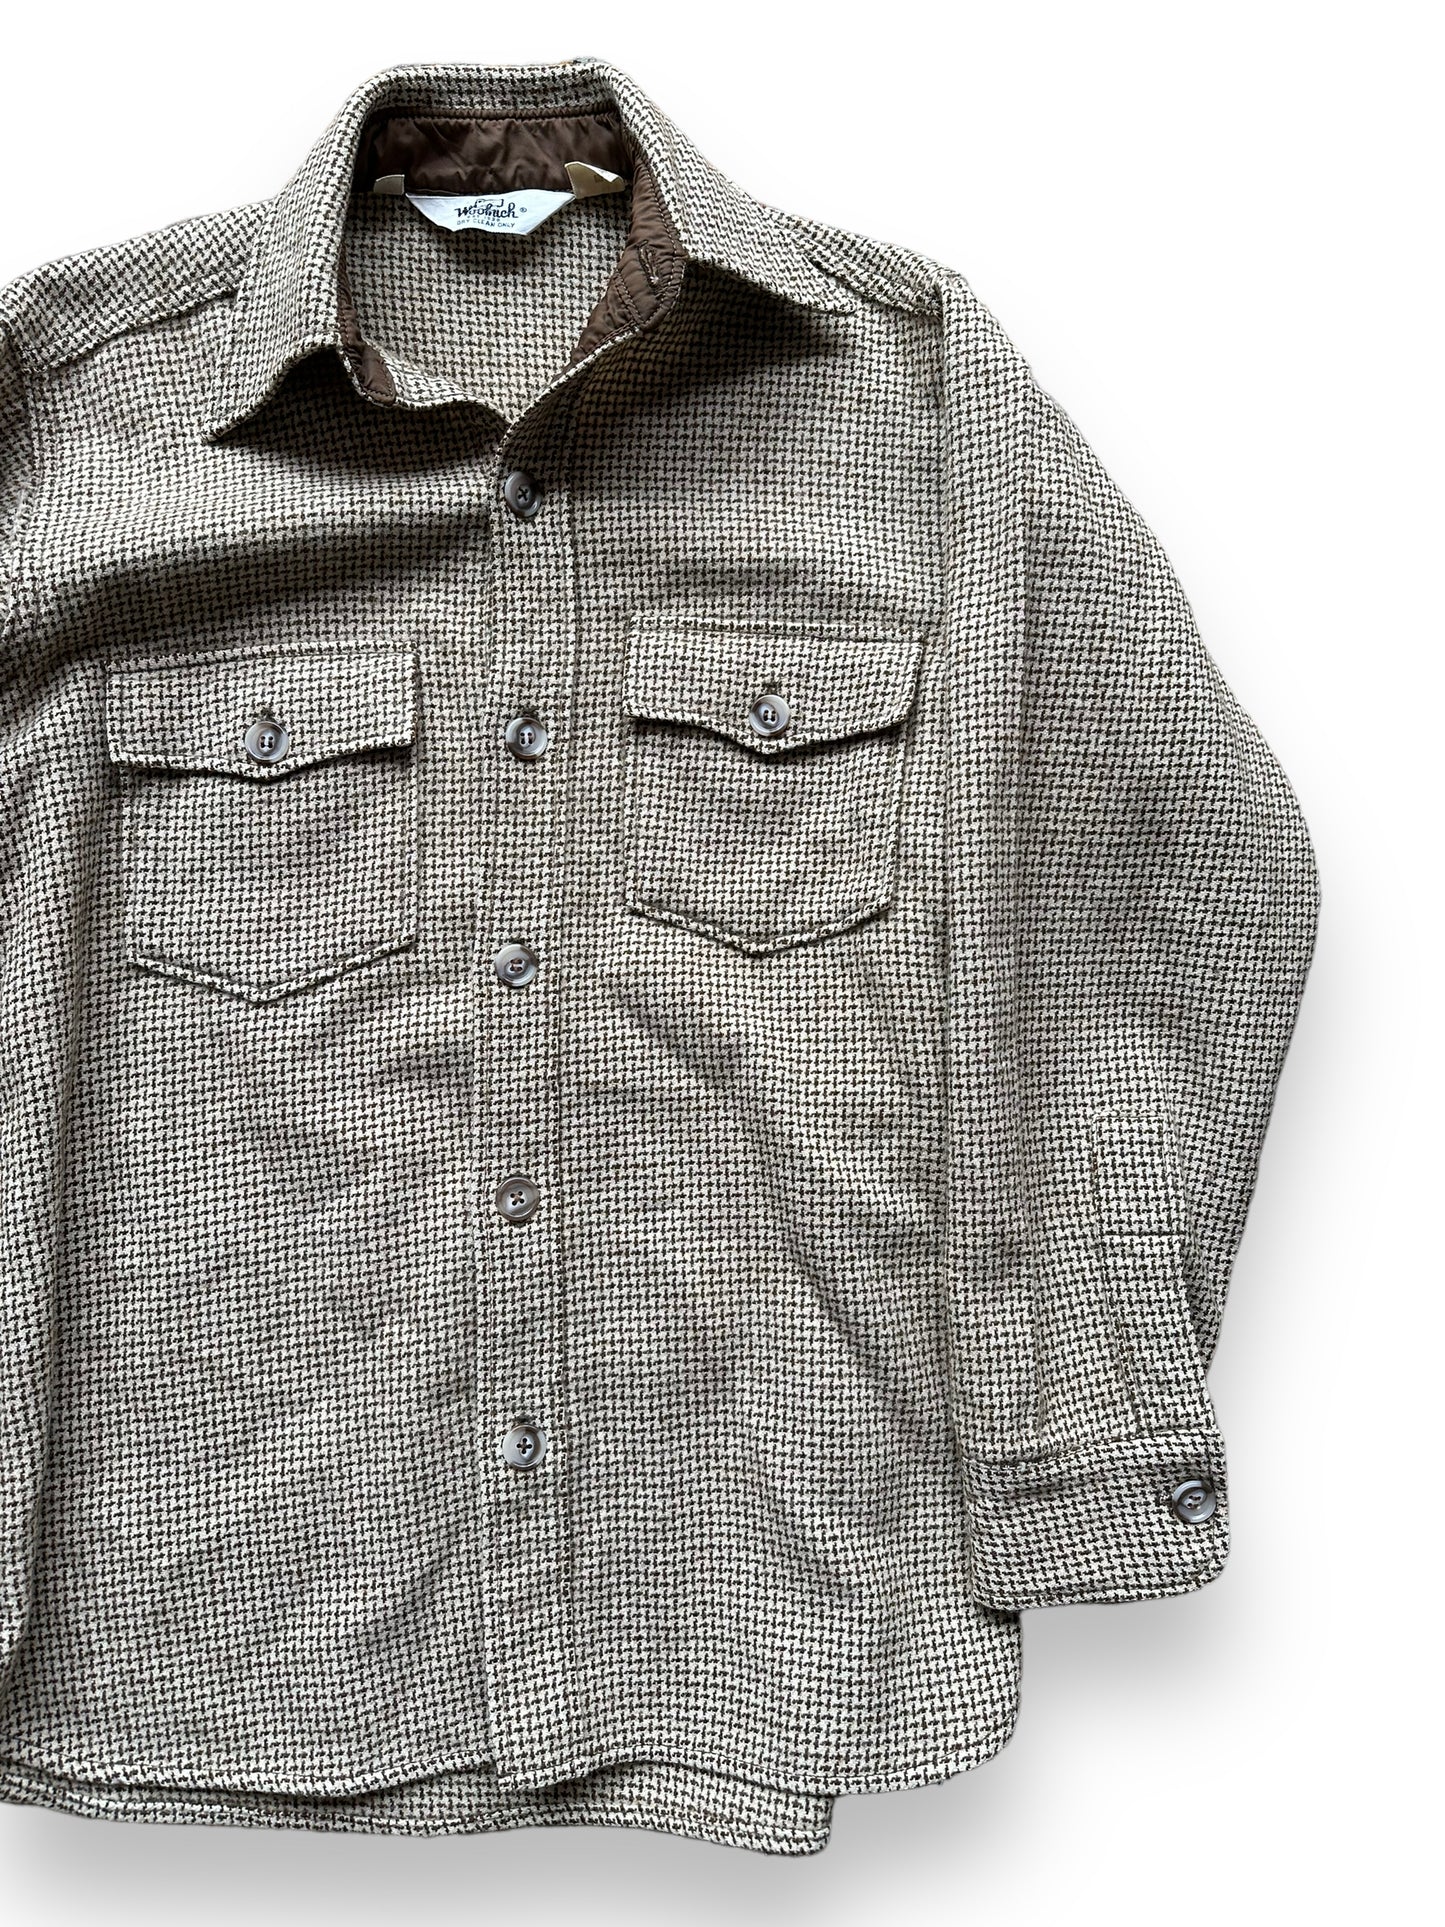 Front Left View of Vintage Tan Houndstooth Woolrich Shirt Jacket SZ M |  Barn Owl Vintage Goods | Vintage Workwear Seattle